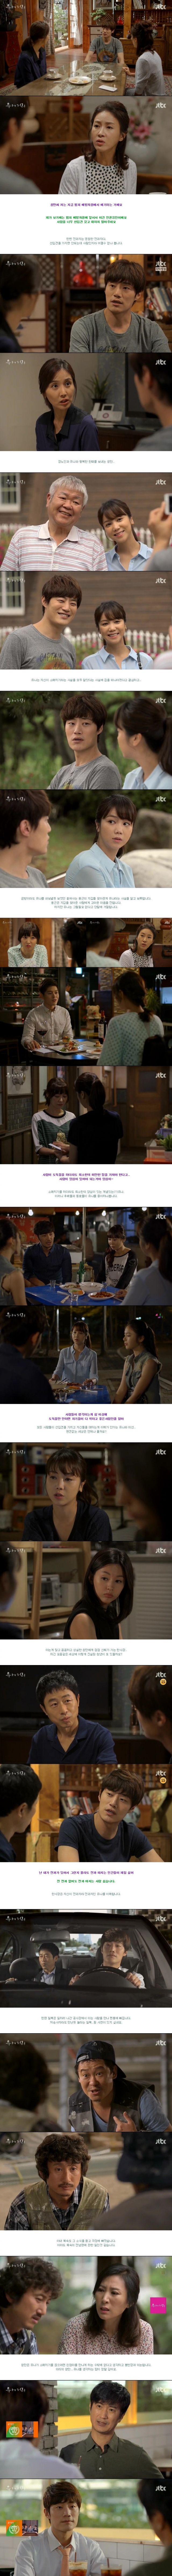 episode 26 captures for the Korean drama 'Yuna's Street'